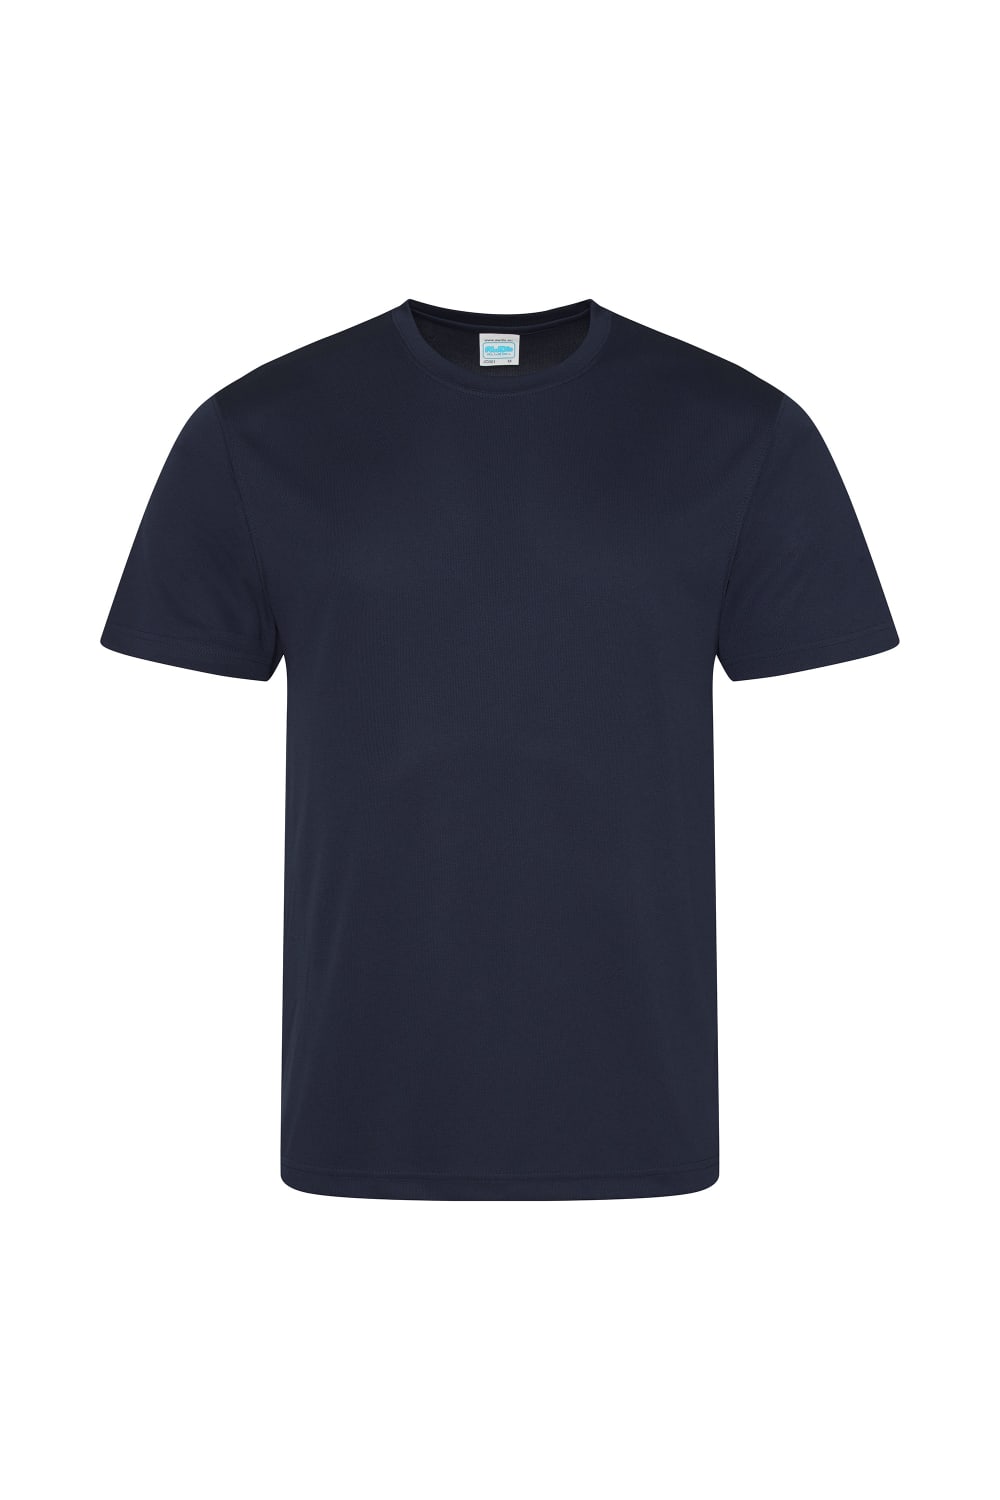 Mens Performance Plain T-Shirt - French Navy